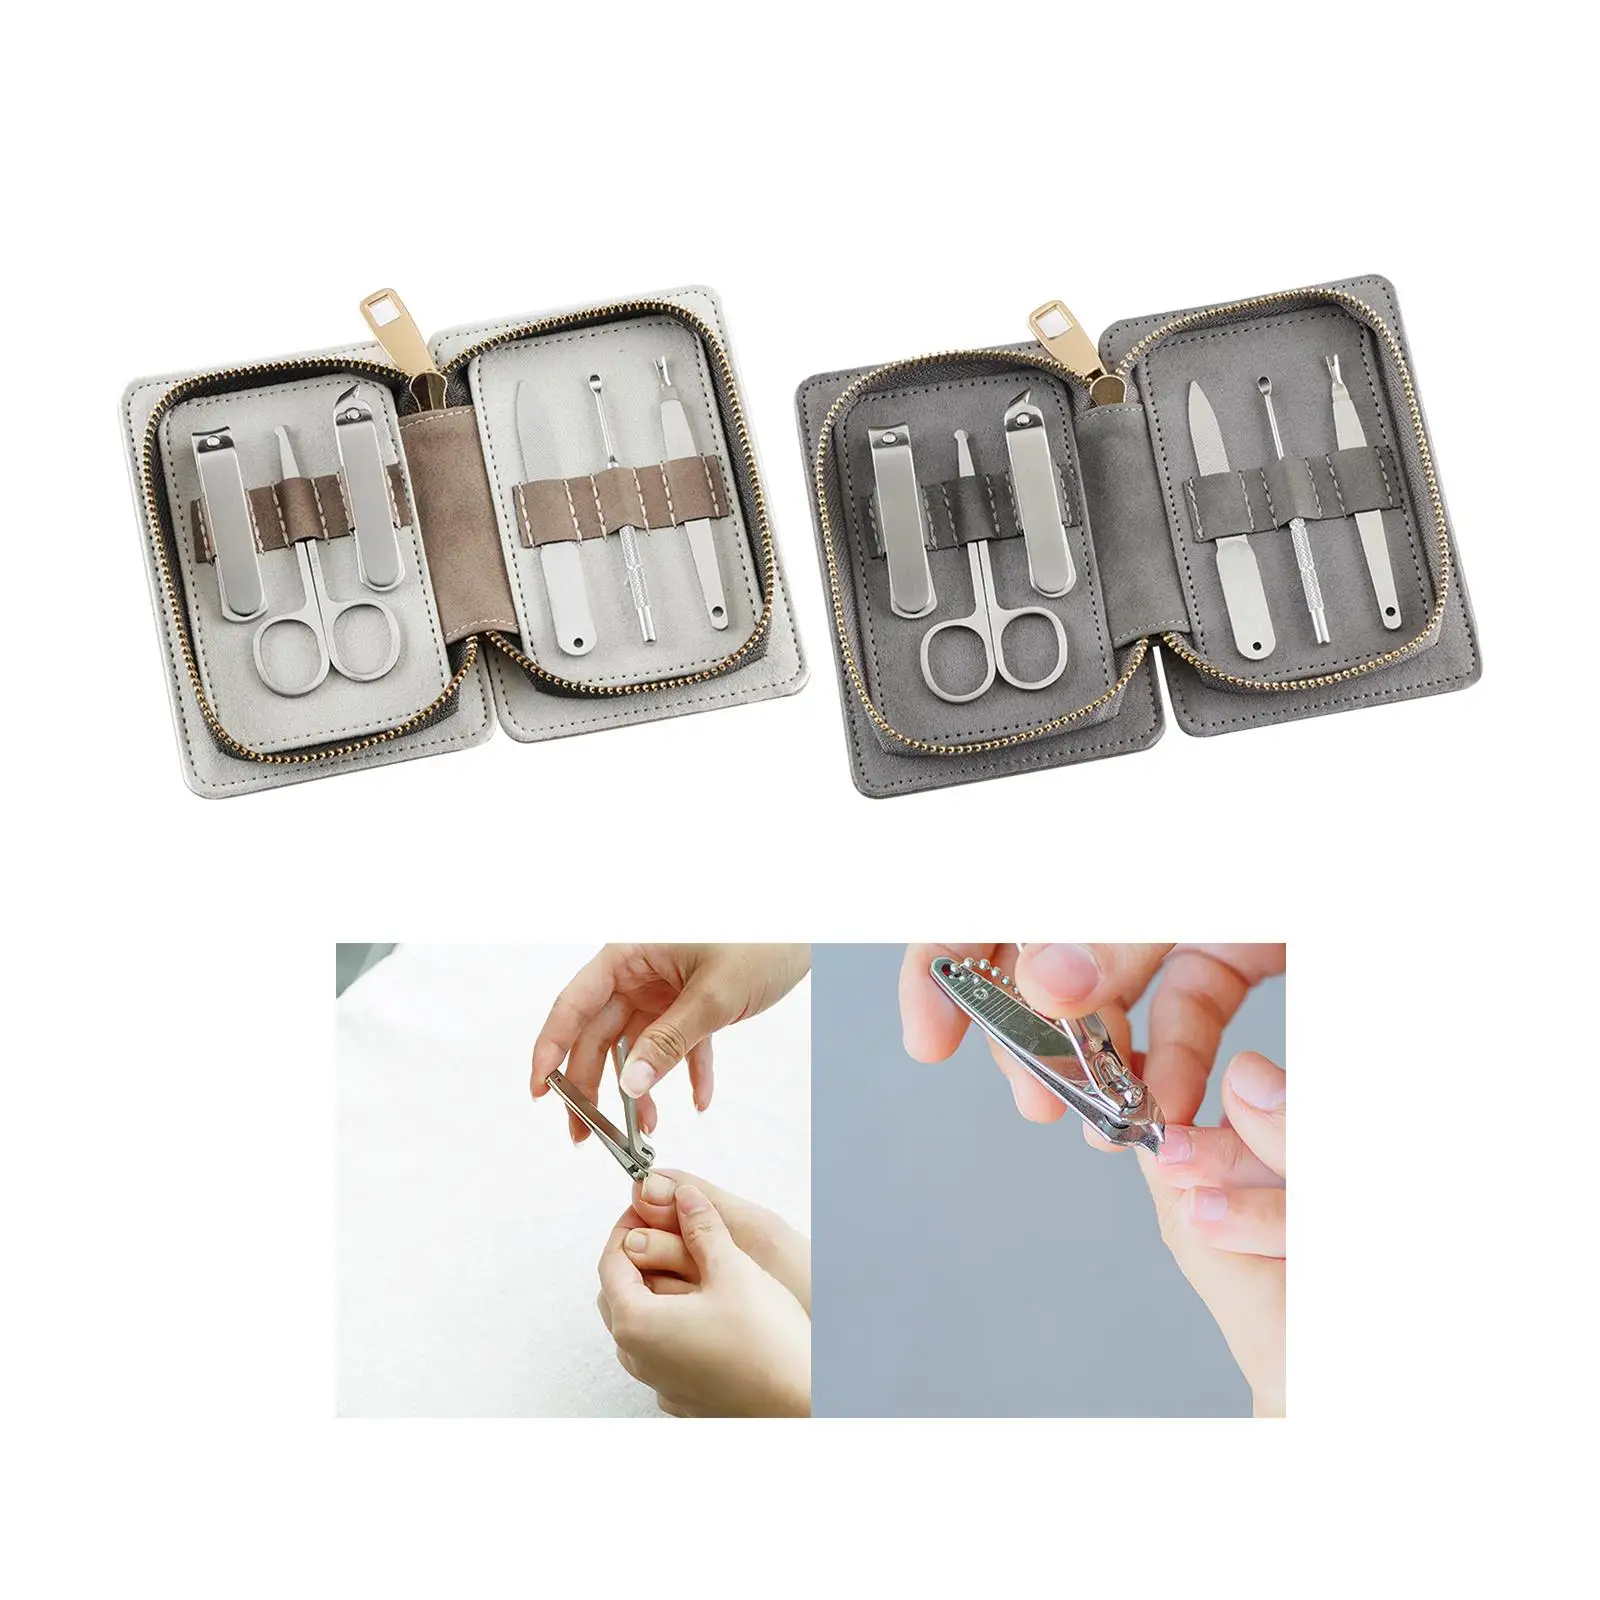 6Pcs Portable Manicure Kit Gift Fingernails Toenails Nail Care Tools Grooming Kit Nail Clippers Pedicure Kit for Travel Home